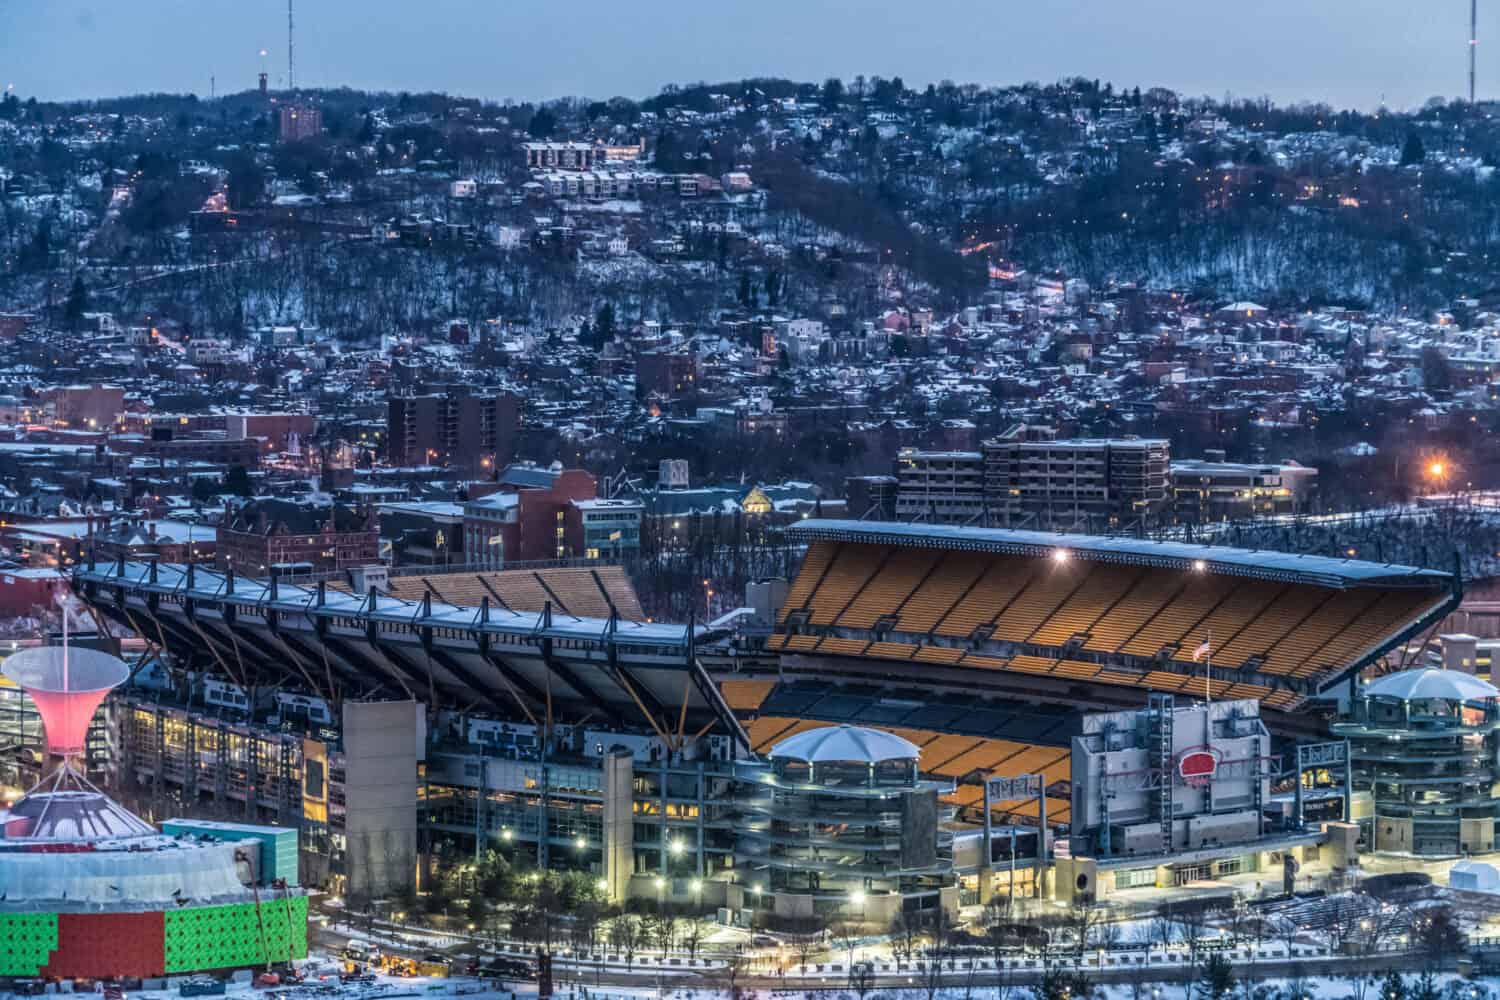 Night Lights Football Stadium In Pittsburgh